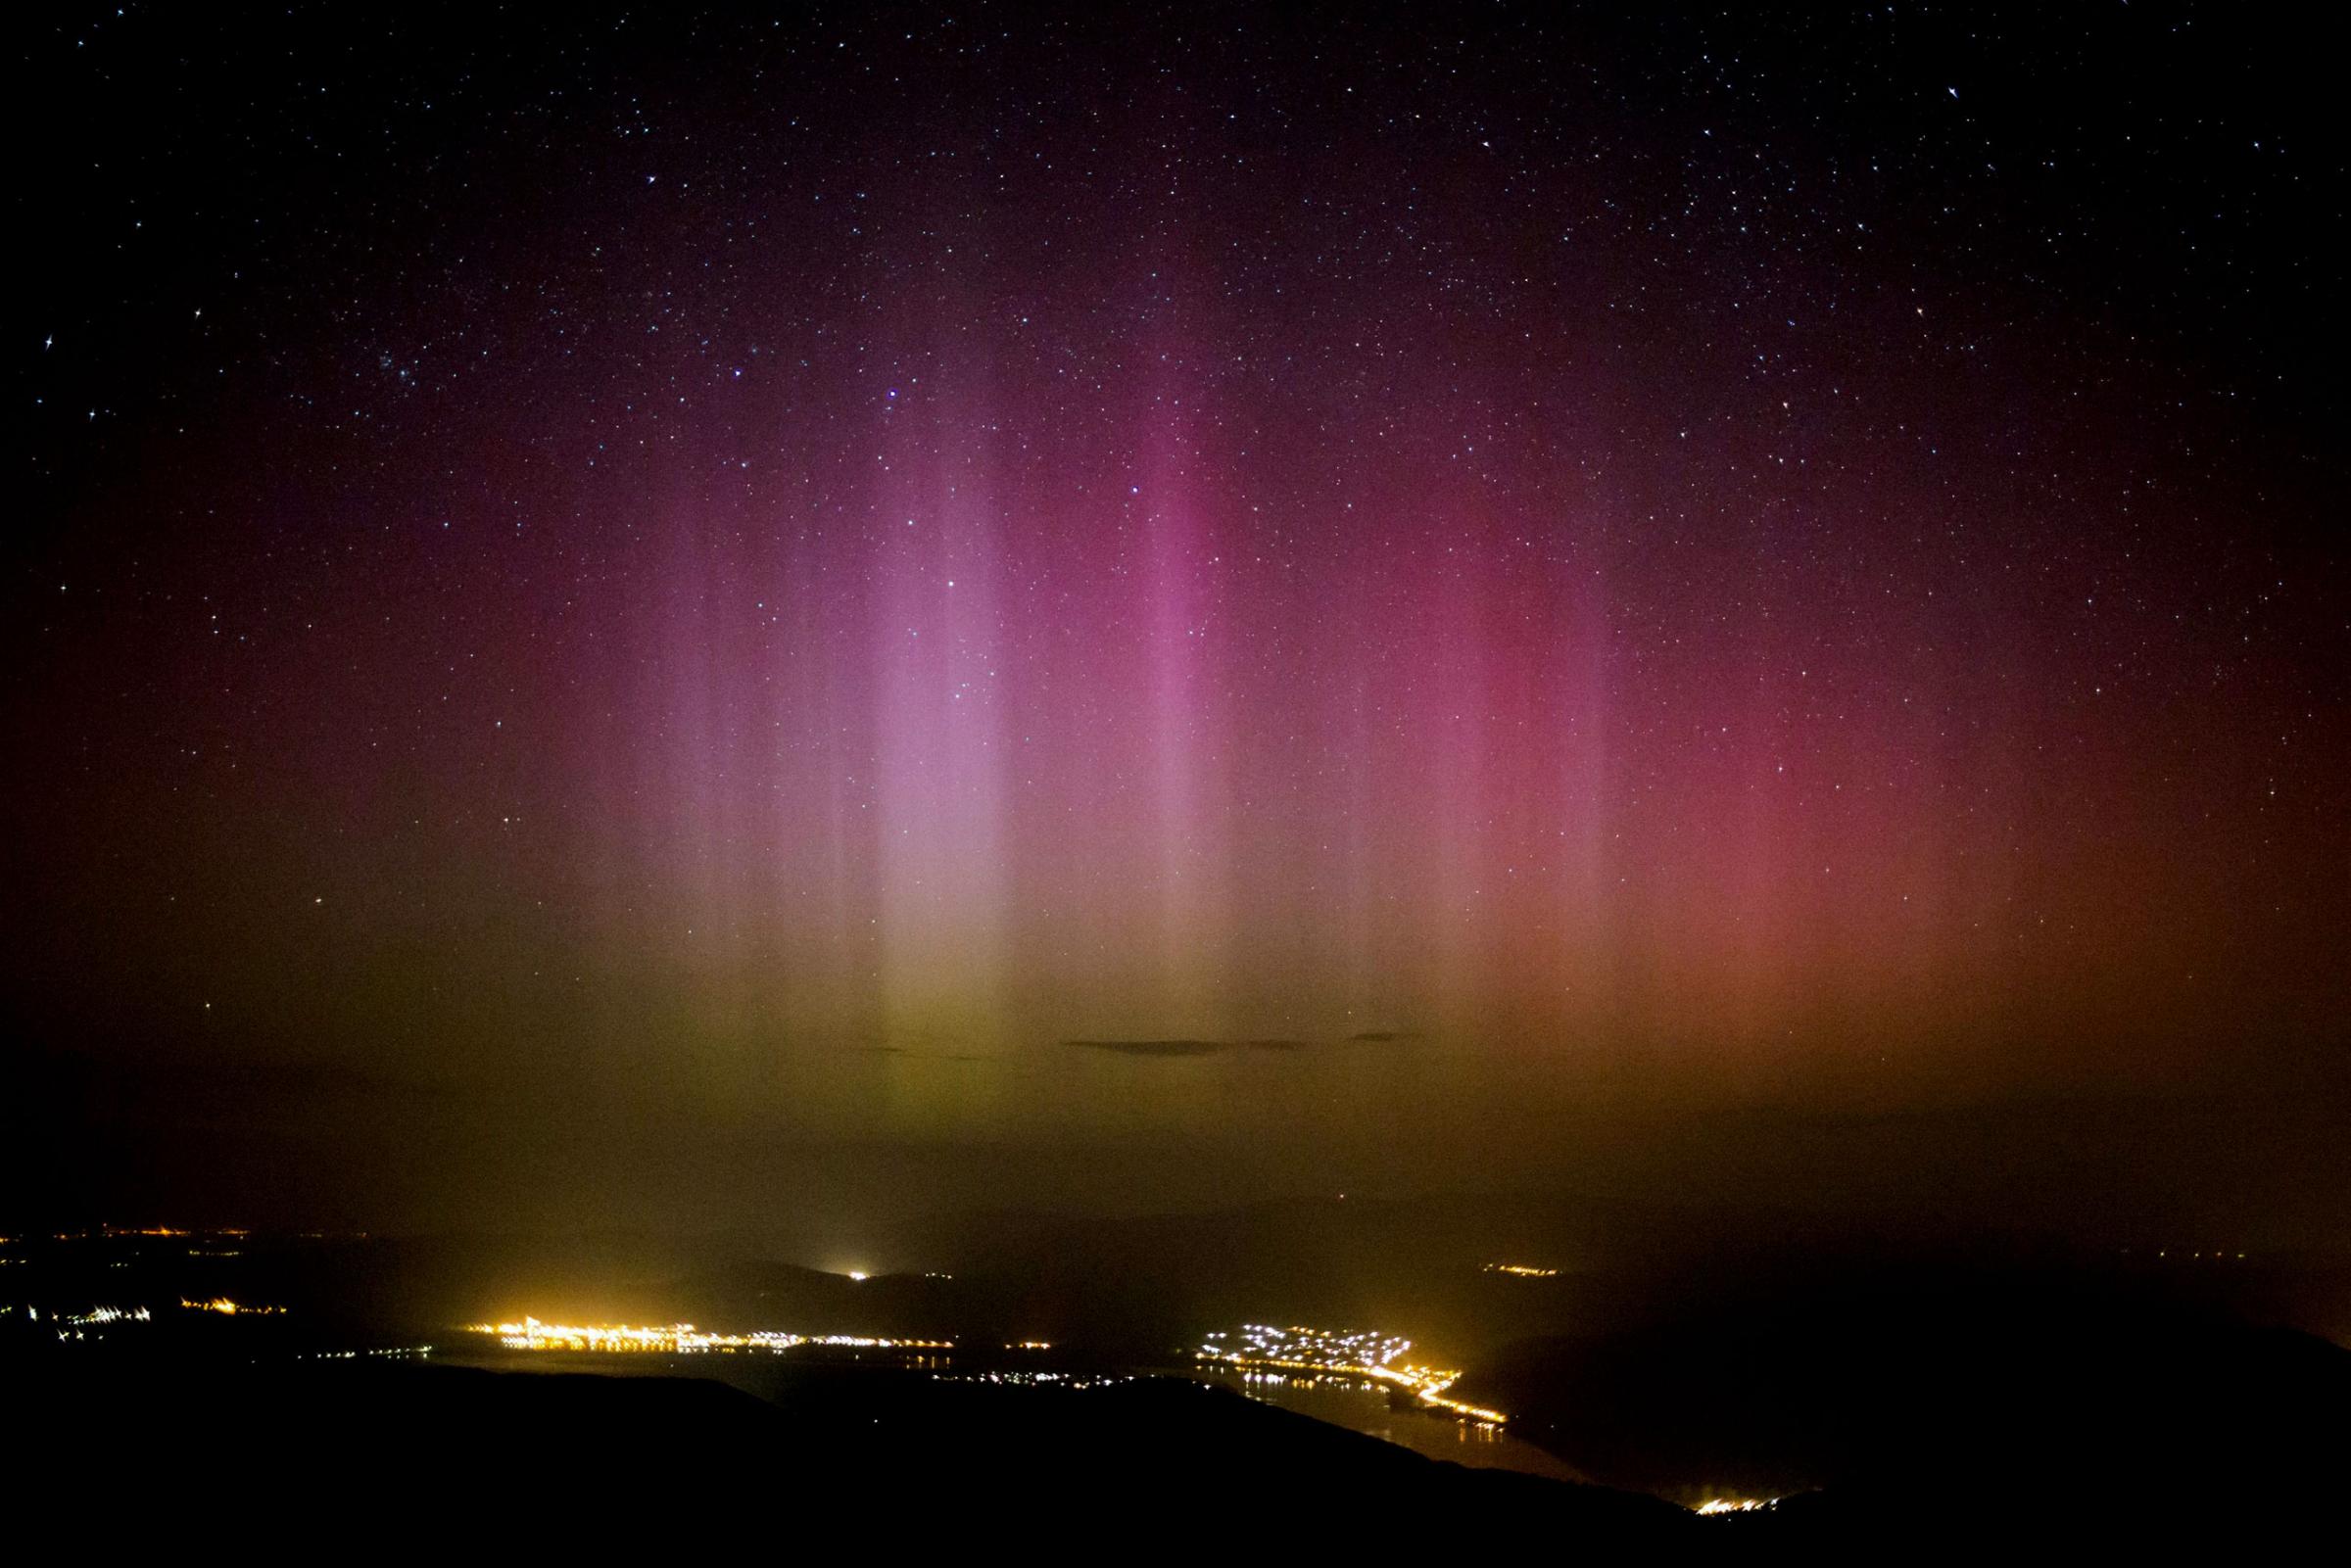 The Northern Lights (Aurora borealis) are seen on the sky above Pilisszentkereszt, Hungary, on March 18, 2015.